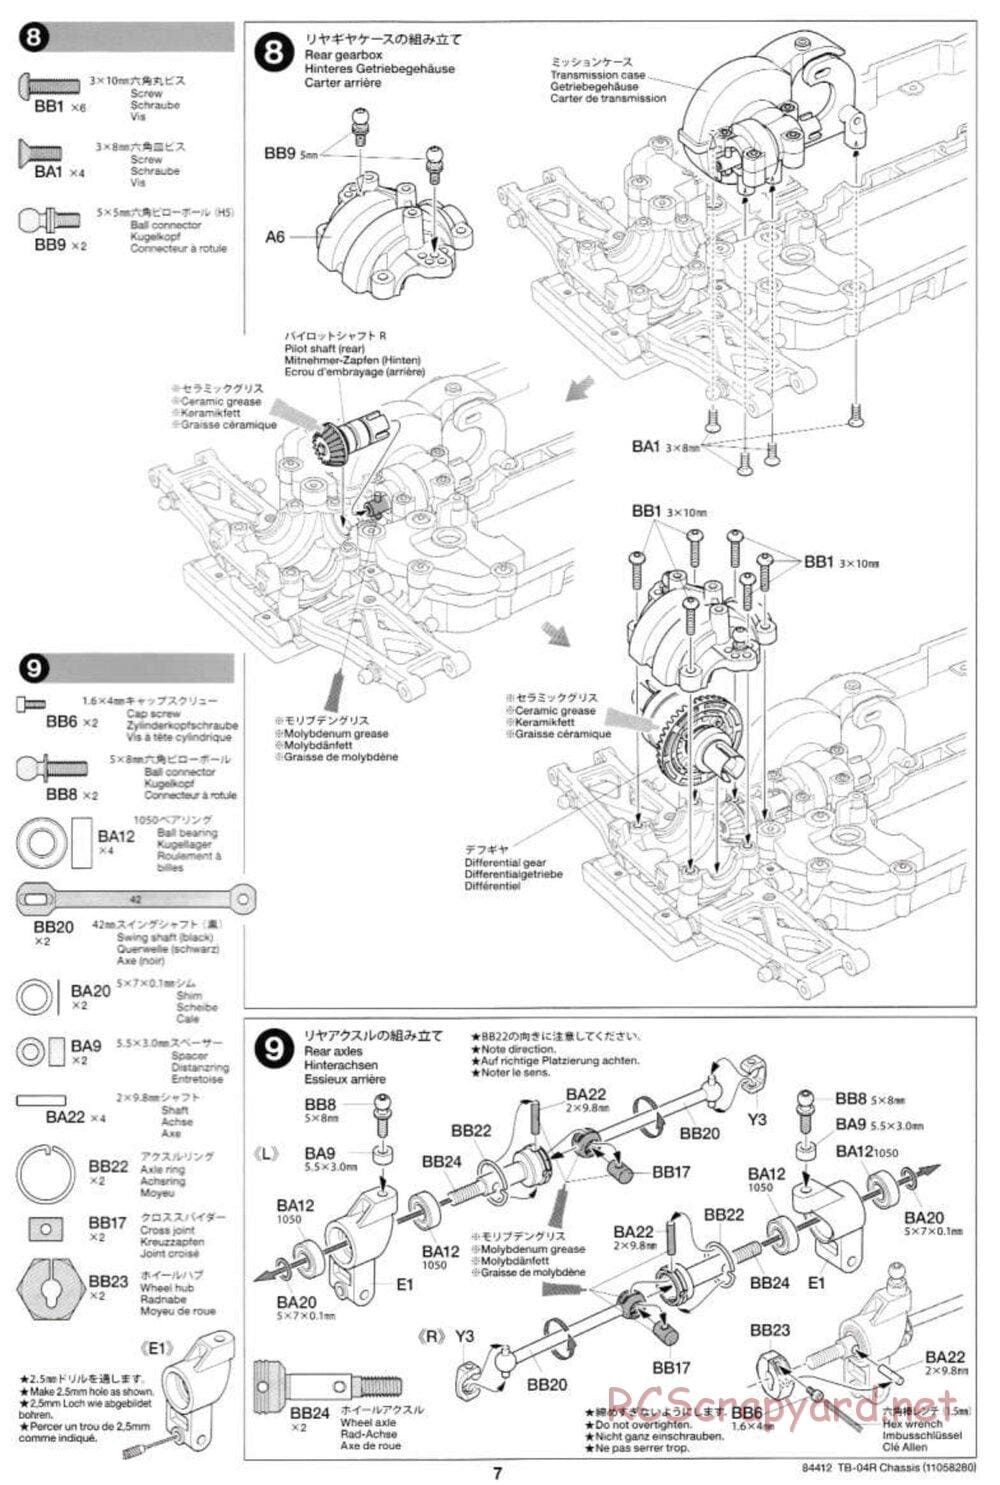 Tamiya - TB-04R Chassis Chassis - Manual - Page 7